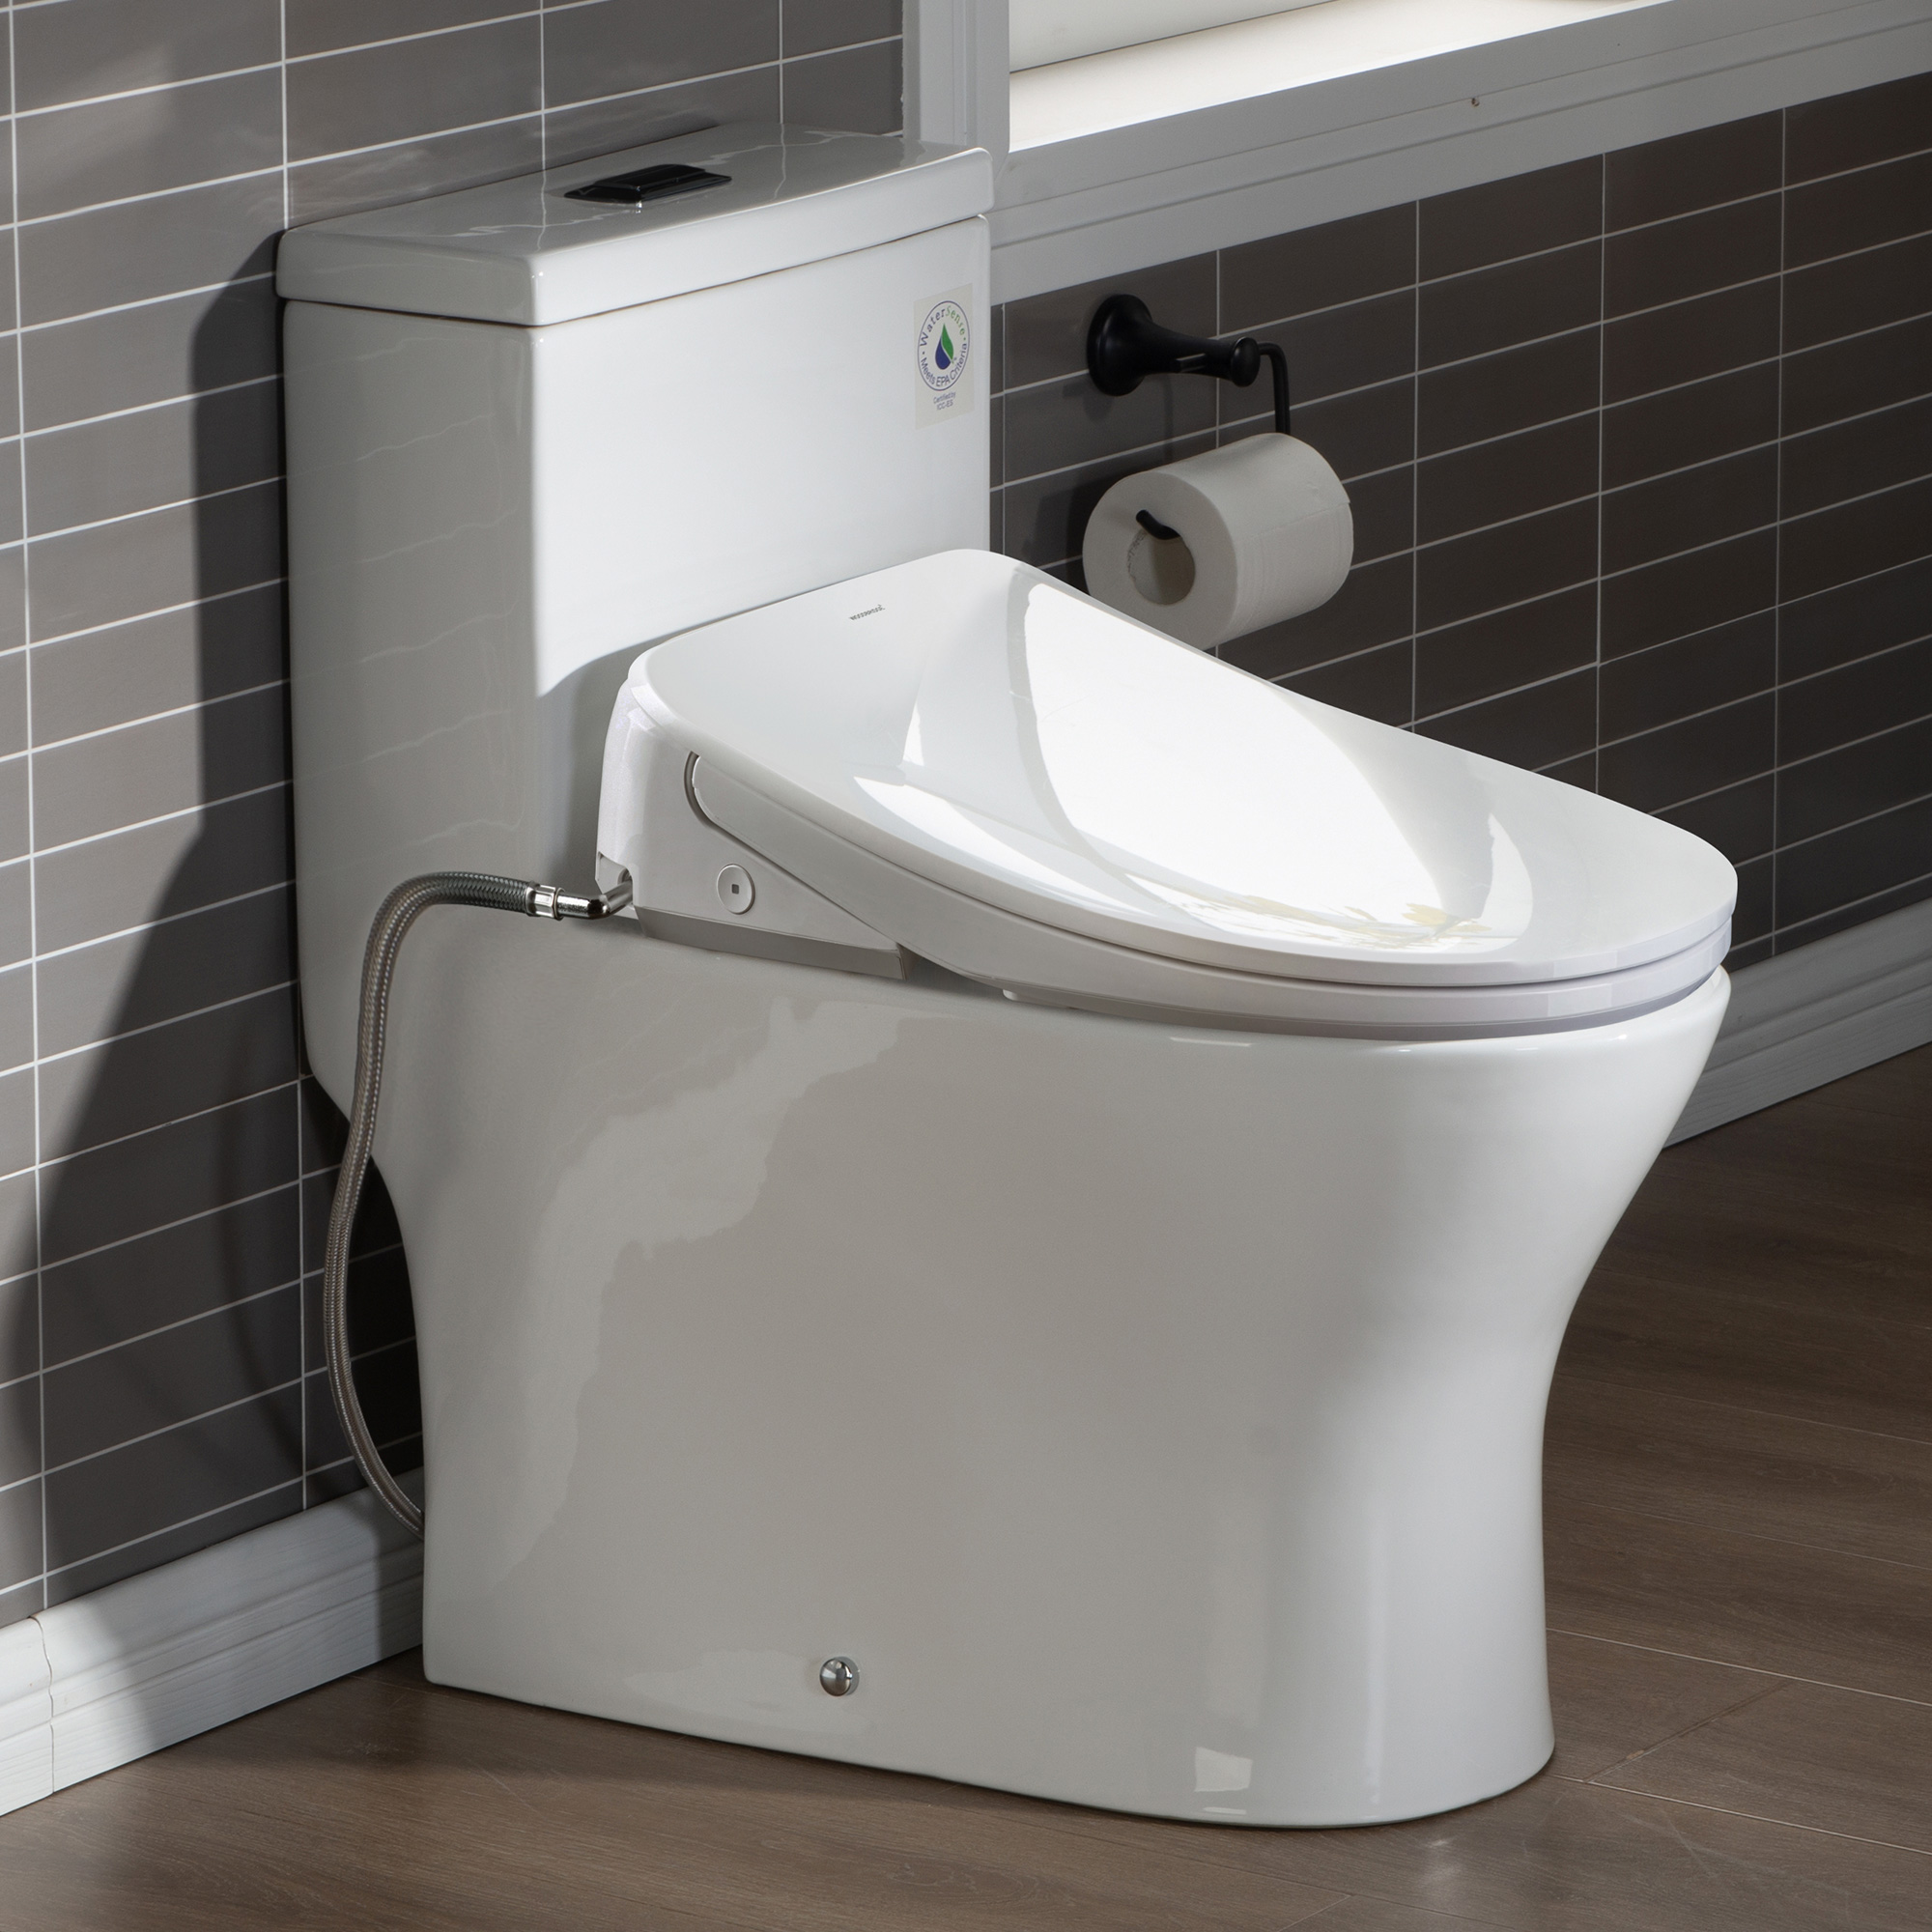 WOODBRIDGE Elongated 1-Piece Toilet with Advanced Auto Open & Close Bidet Smart Toilet Seat, Child Wash, 1000 Gram MaP Flushing Score, 1.28 GPF Dual, Water Sensed